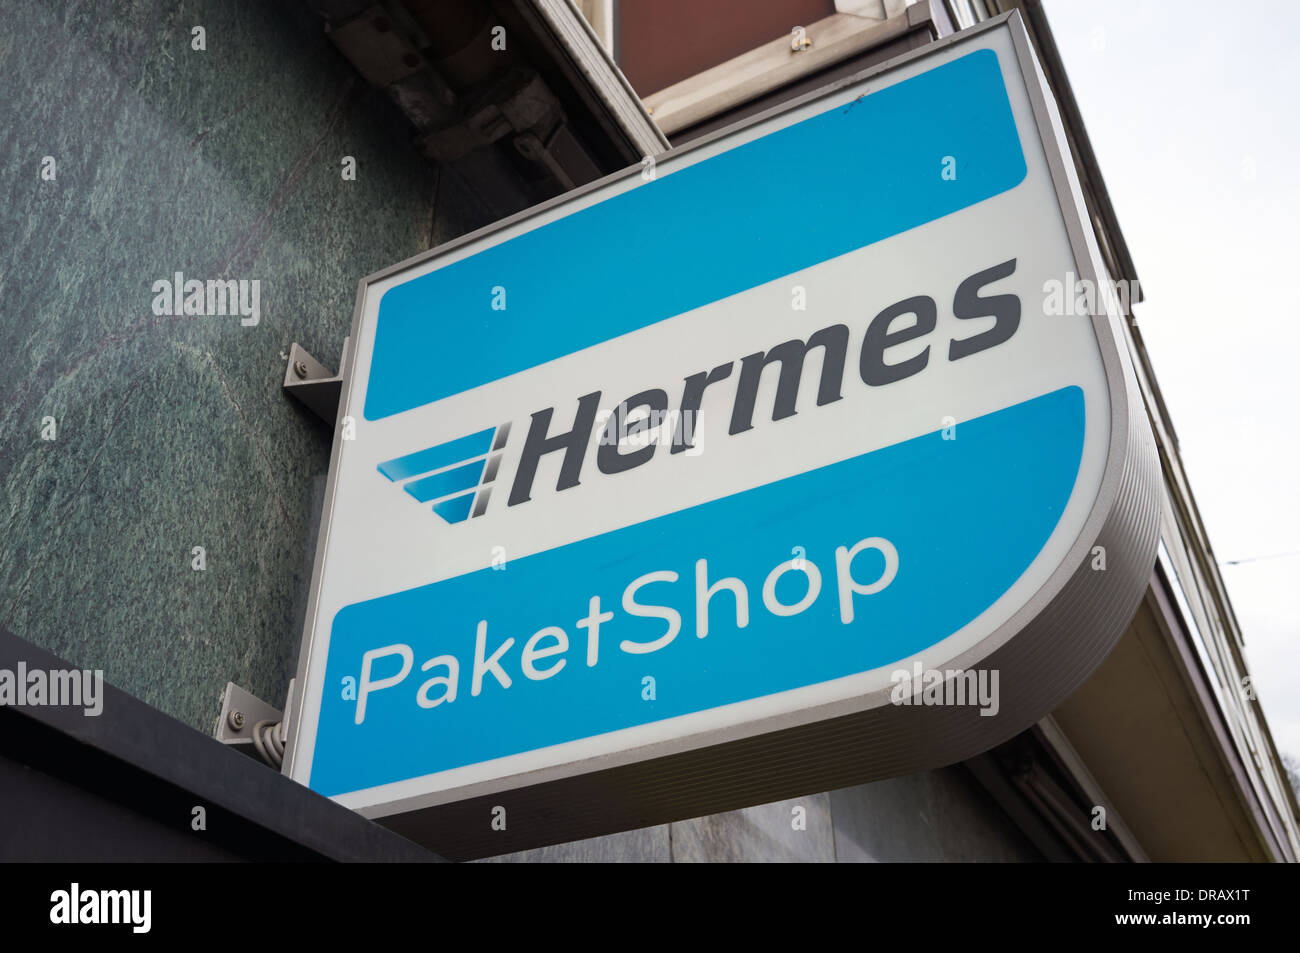 Hermes paket shop Dusseldorf Germany Stock Photo